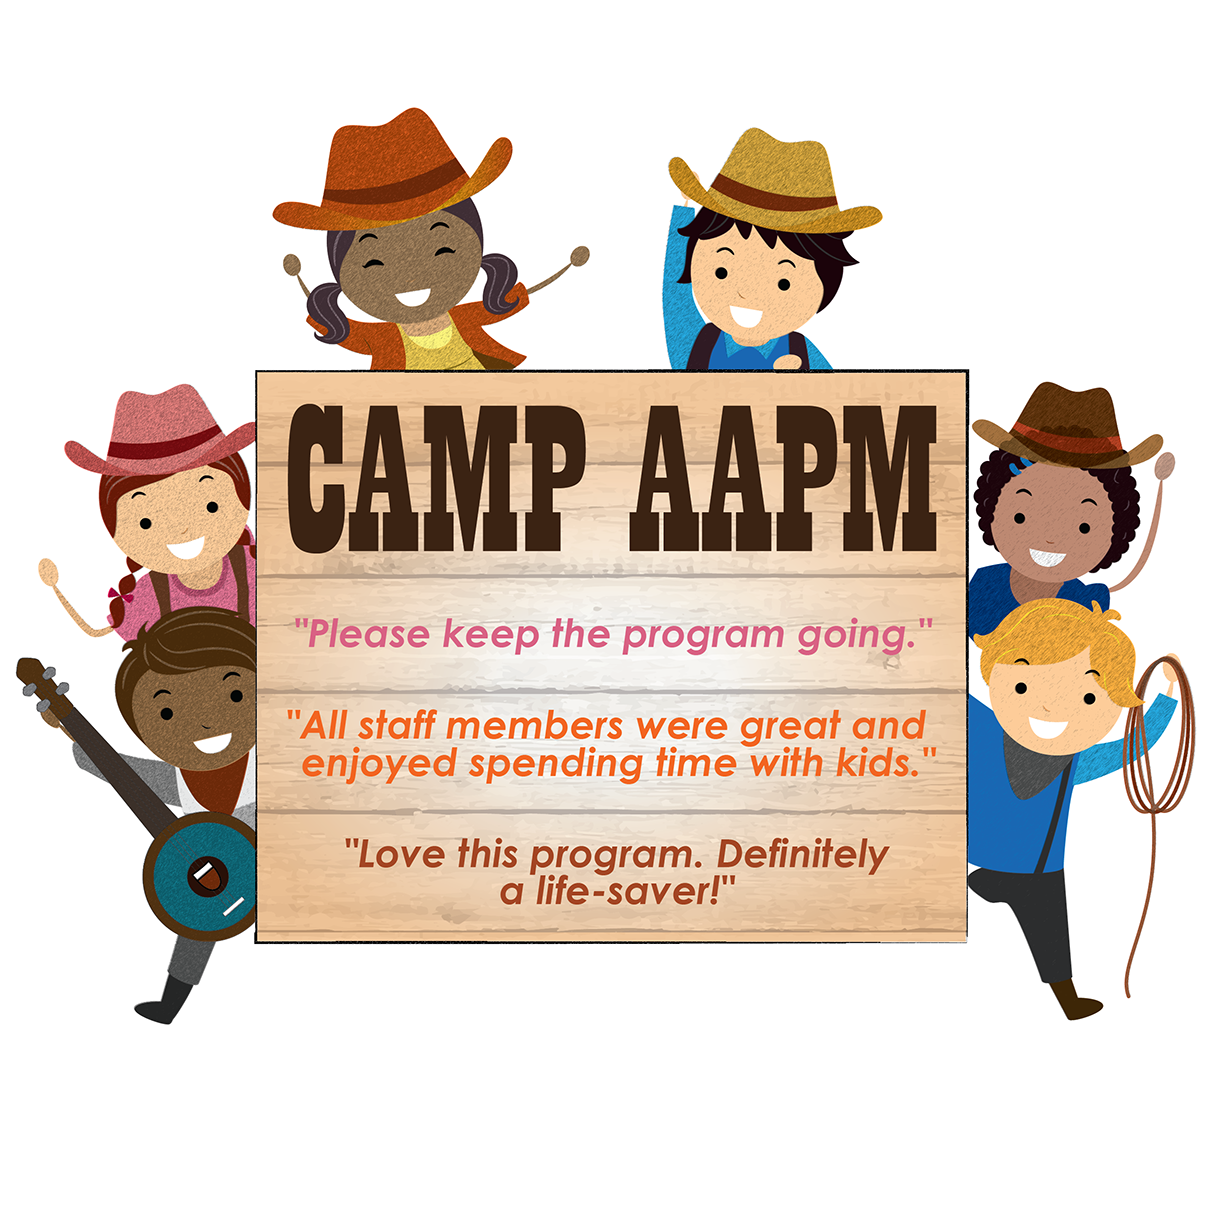 Camp AAPM